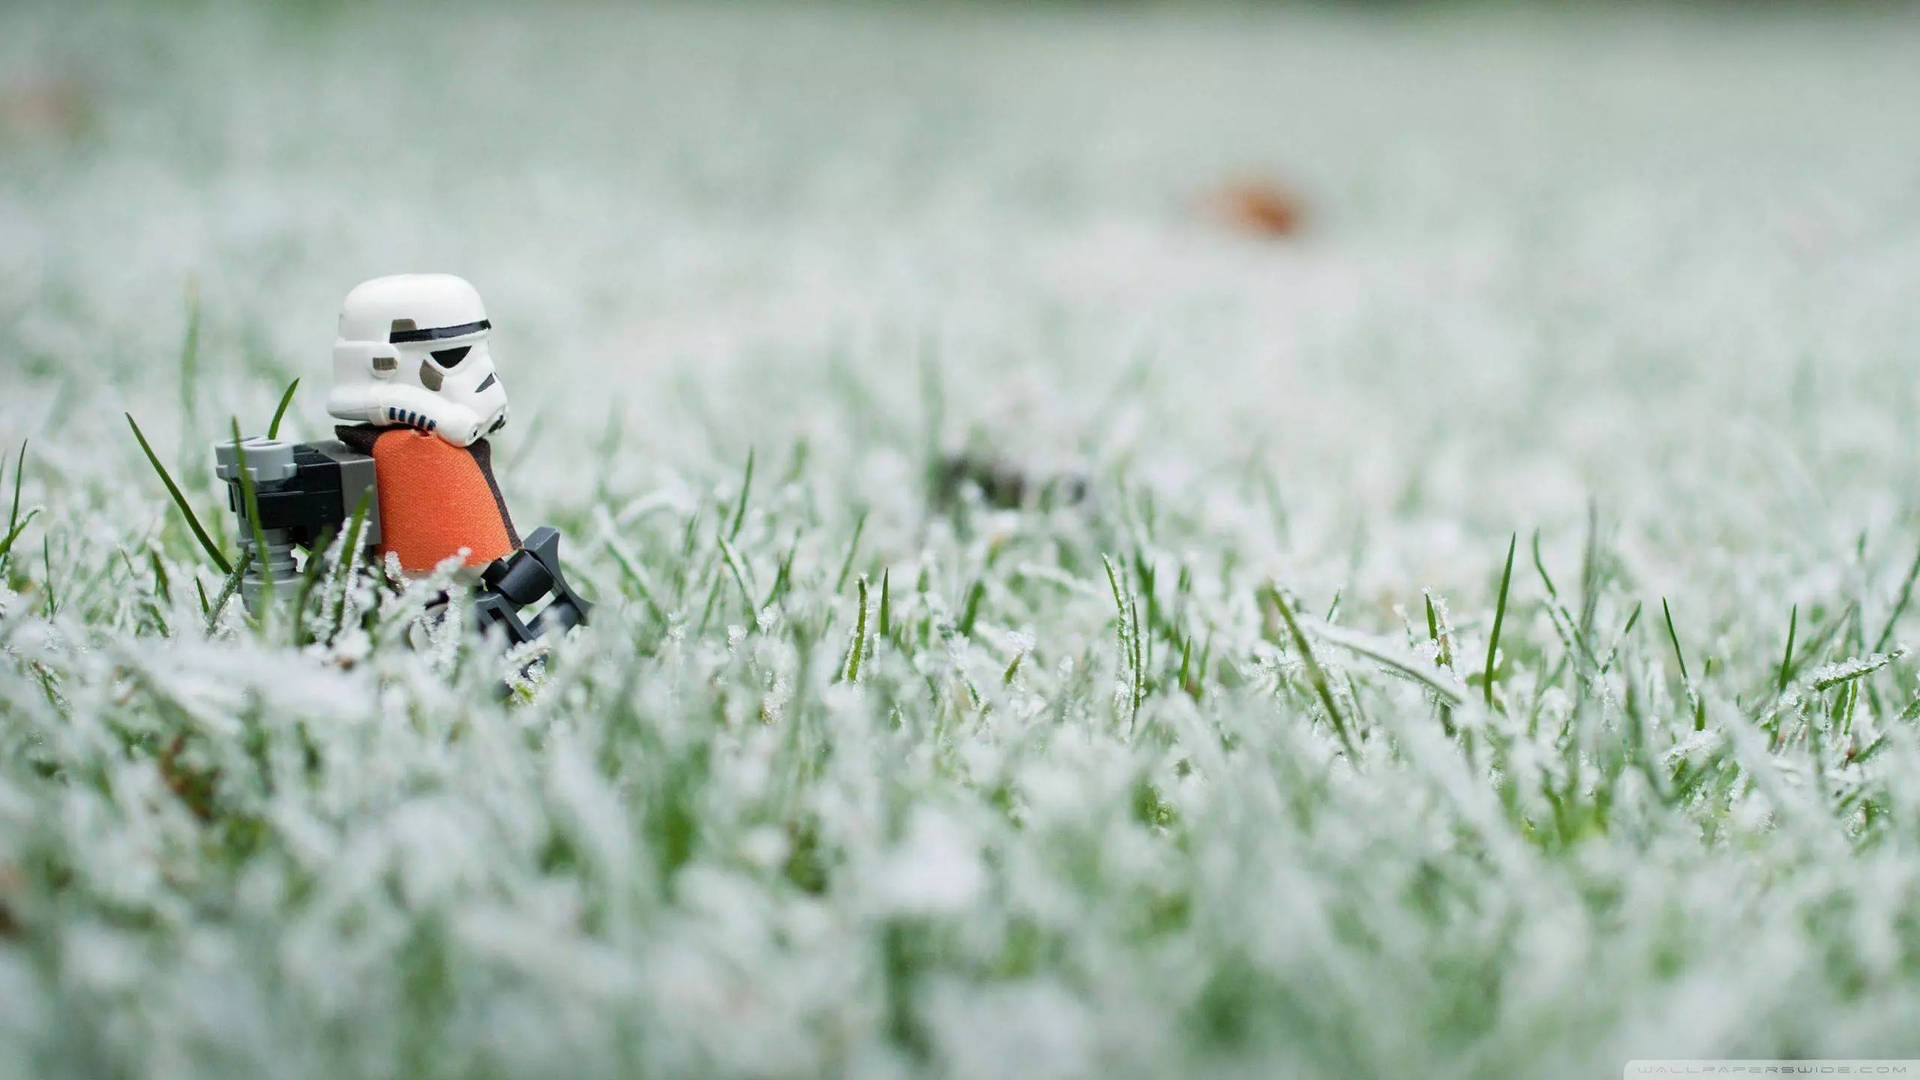 32k Ultra Hd Nature Star Wars Stormtrooper In Grass Background